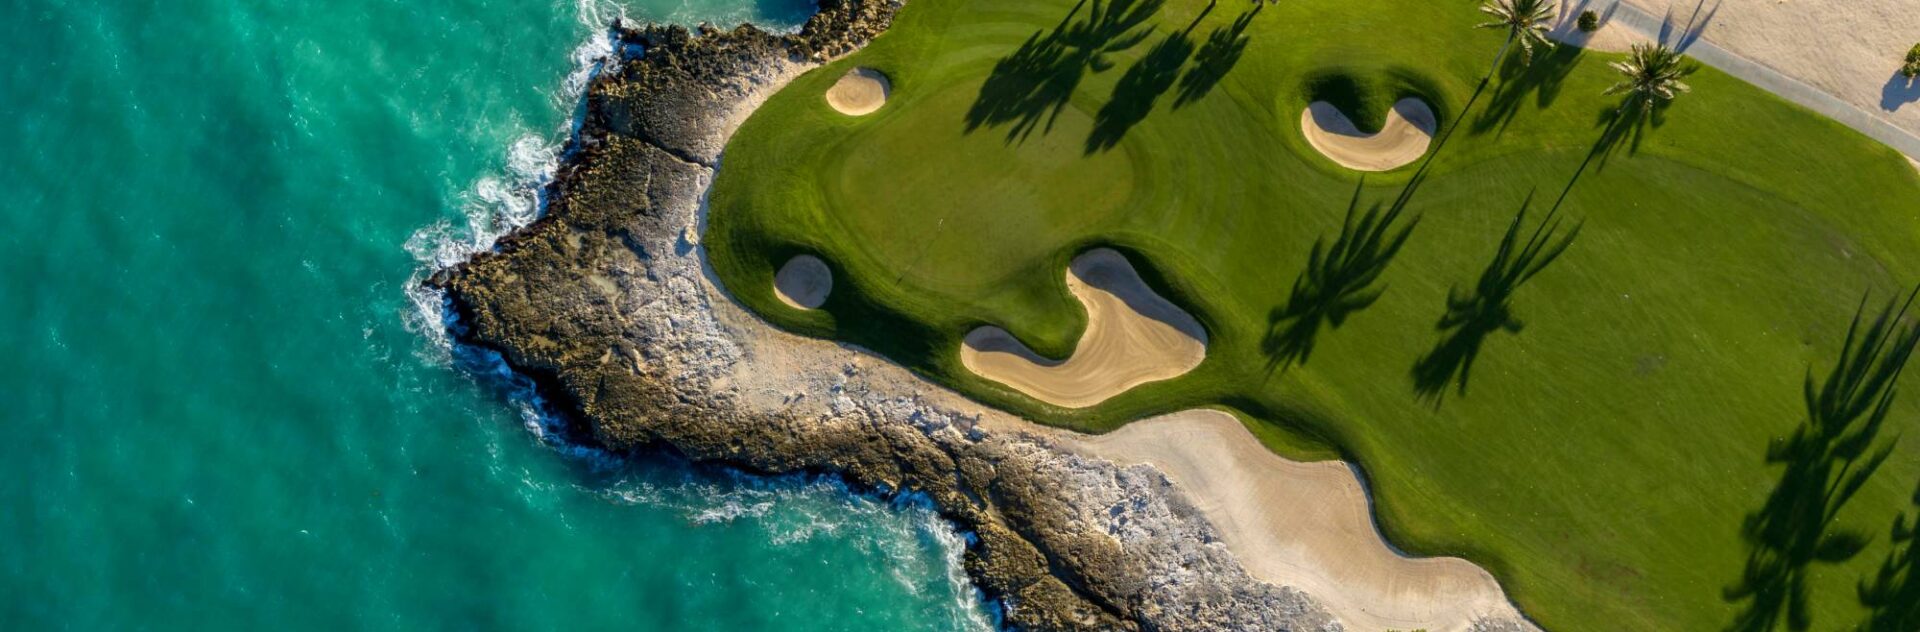 Punta Espada Golf Course